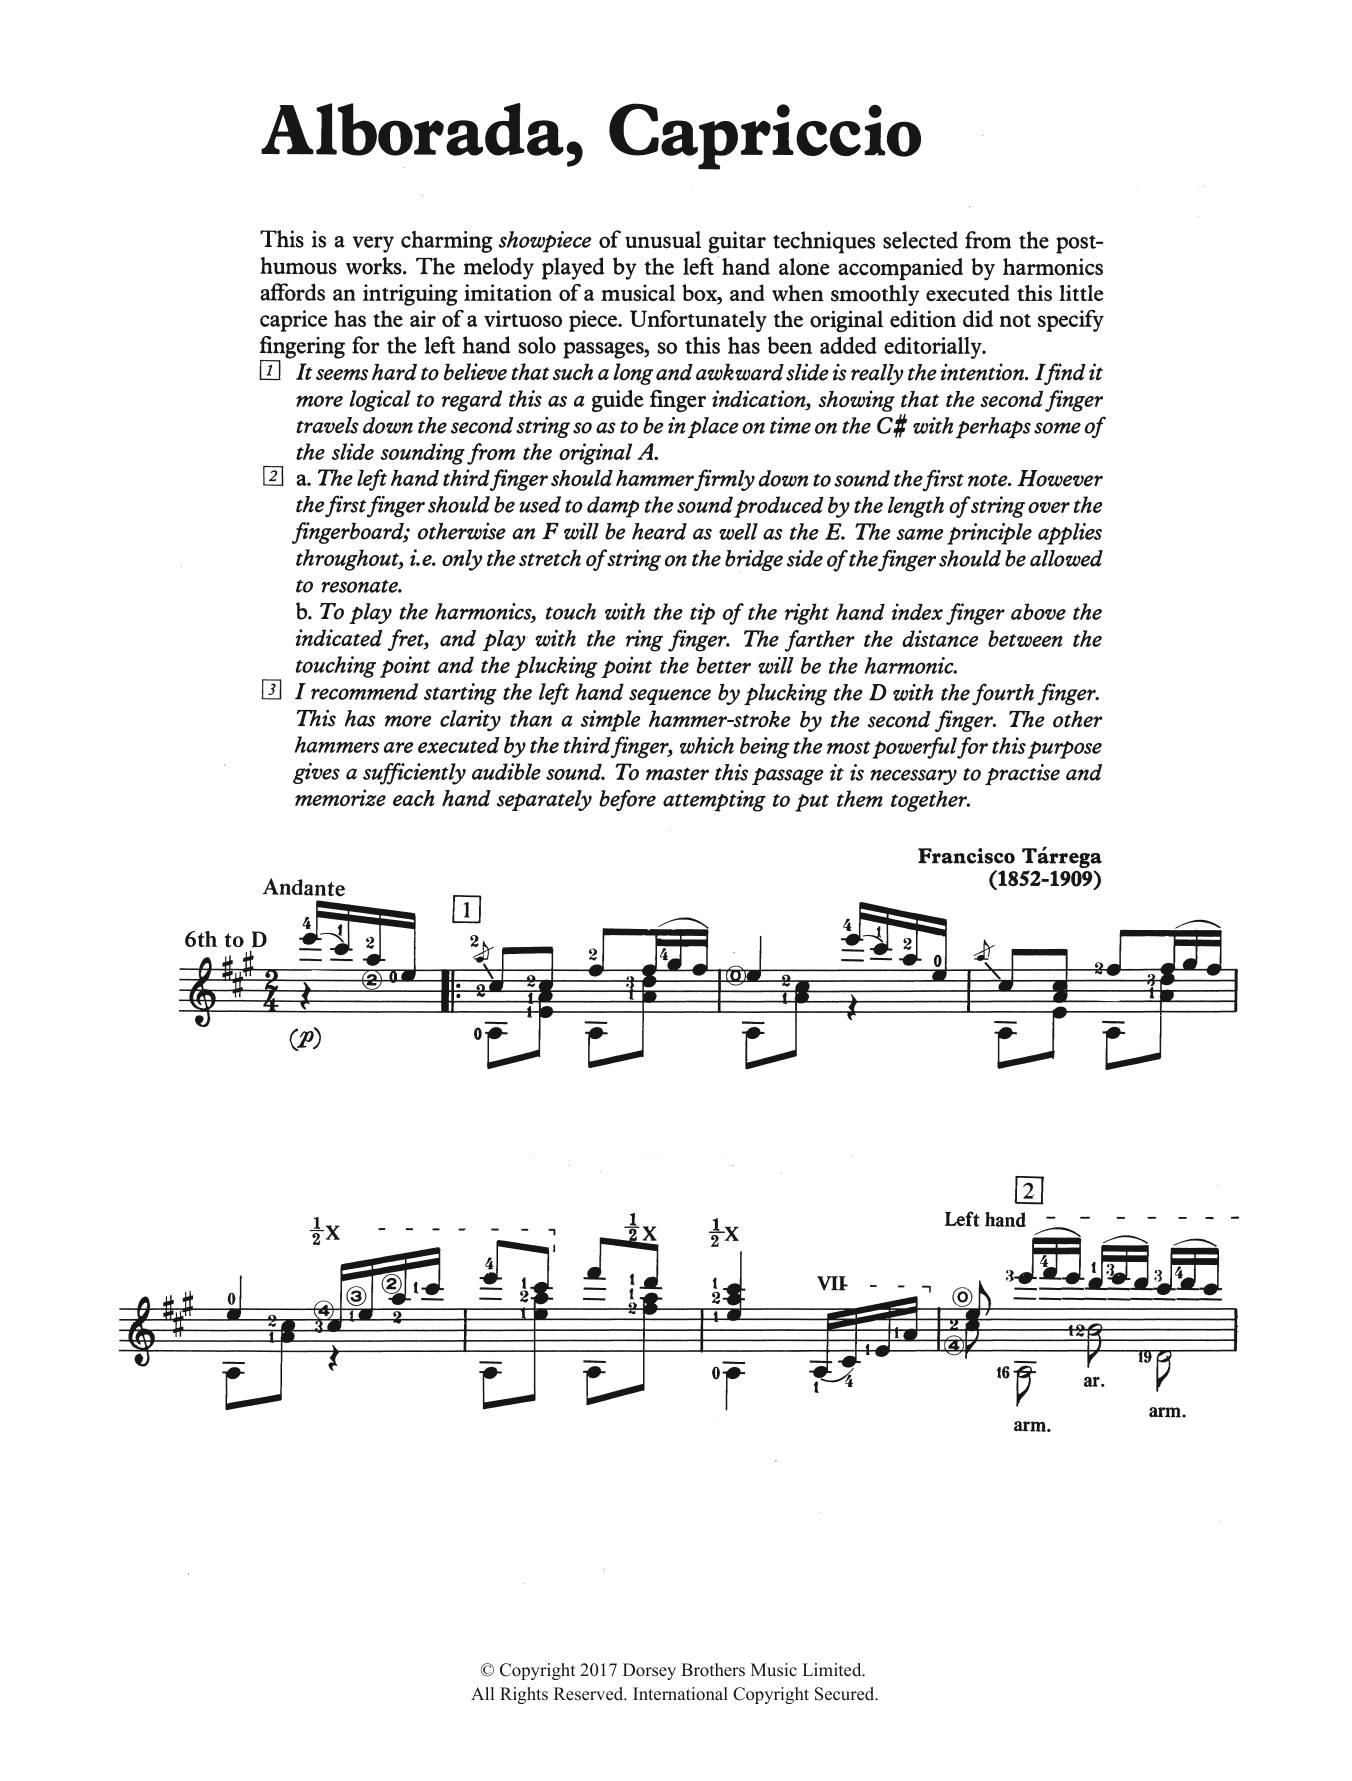 Francisco Tárrega Alborada, Capriccio Sheet Music Notes & Chords for Guitar - Download or Print PDF